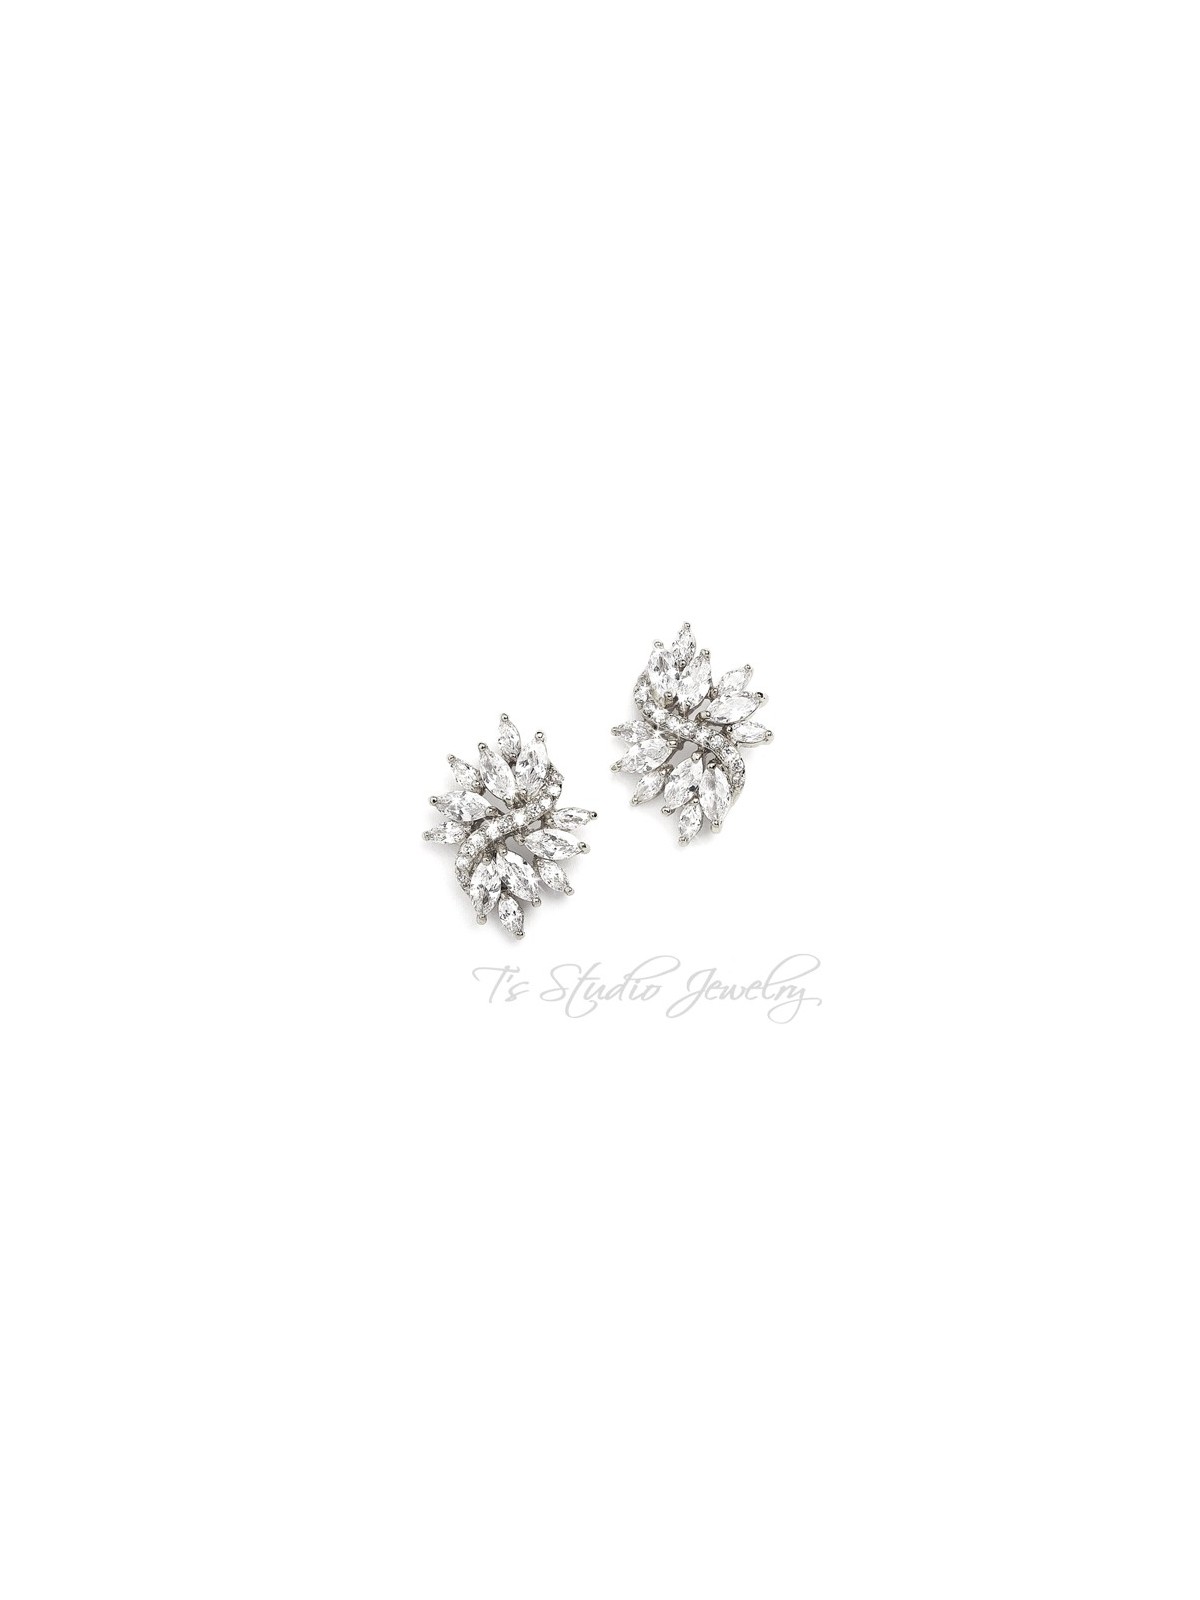 Marquis CZ Cubic Zirconia Crystal Cluster Bridal Stud Earrings